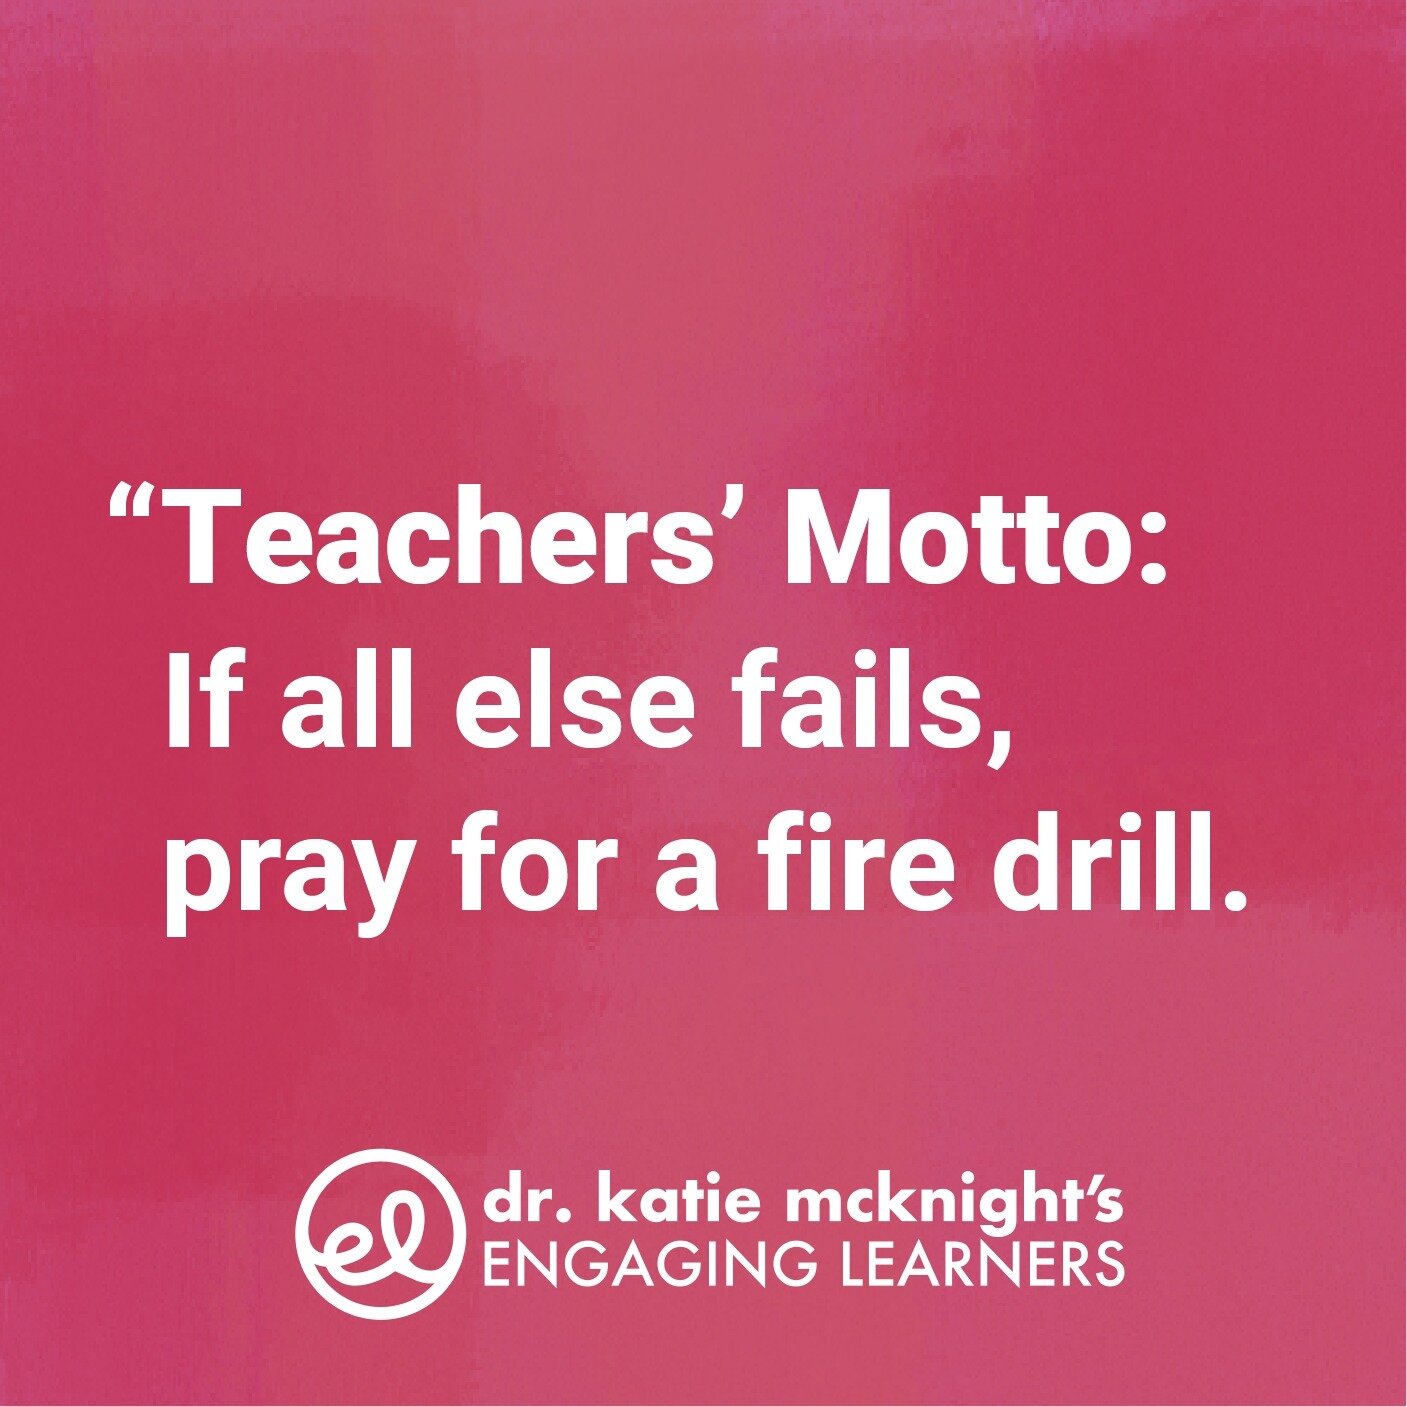 Thoughts? 😅

#teachersofig #teachersofinstagram #iteachtoo #teacherlife #teachergram #k12 #educators #administrators #teachers #edchat #educatorsofinstagram